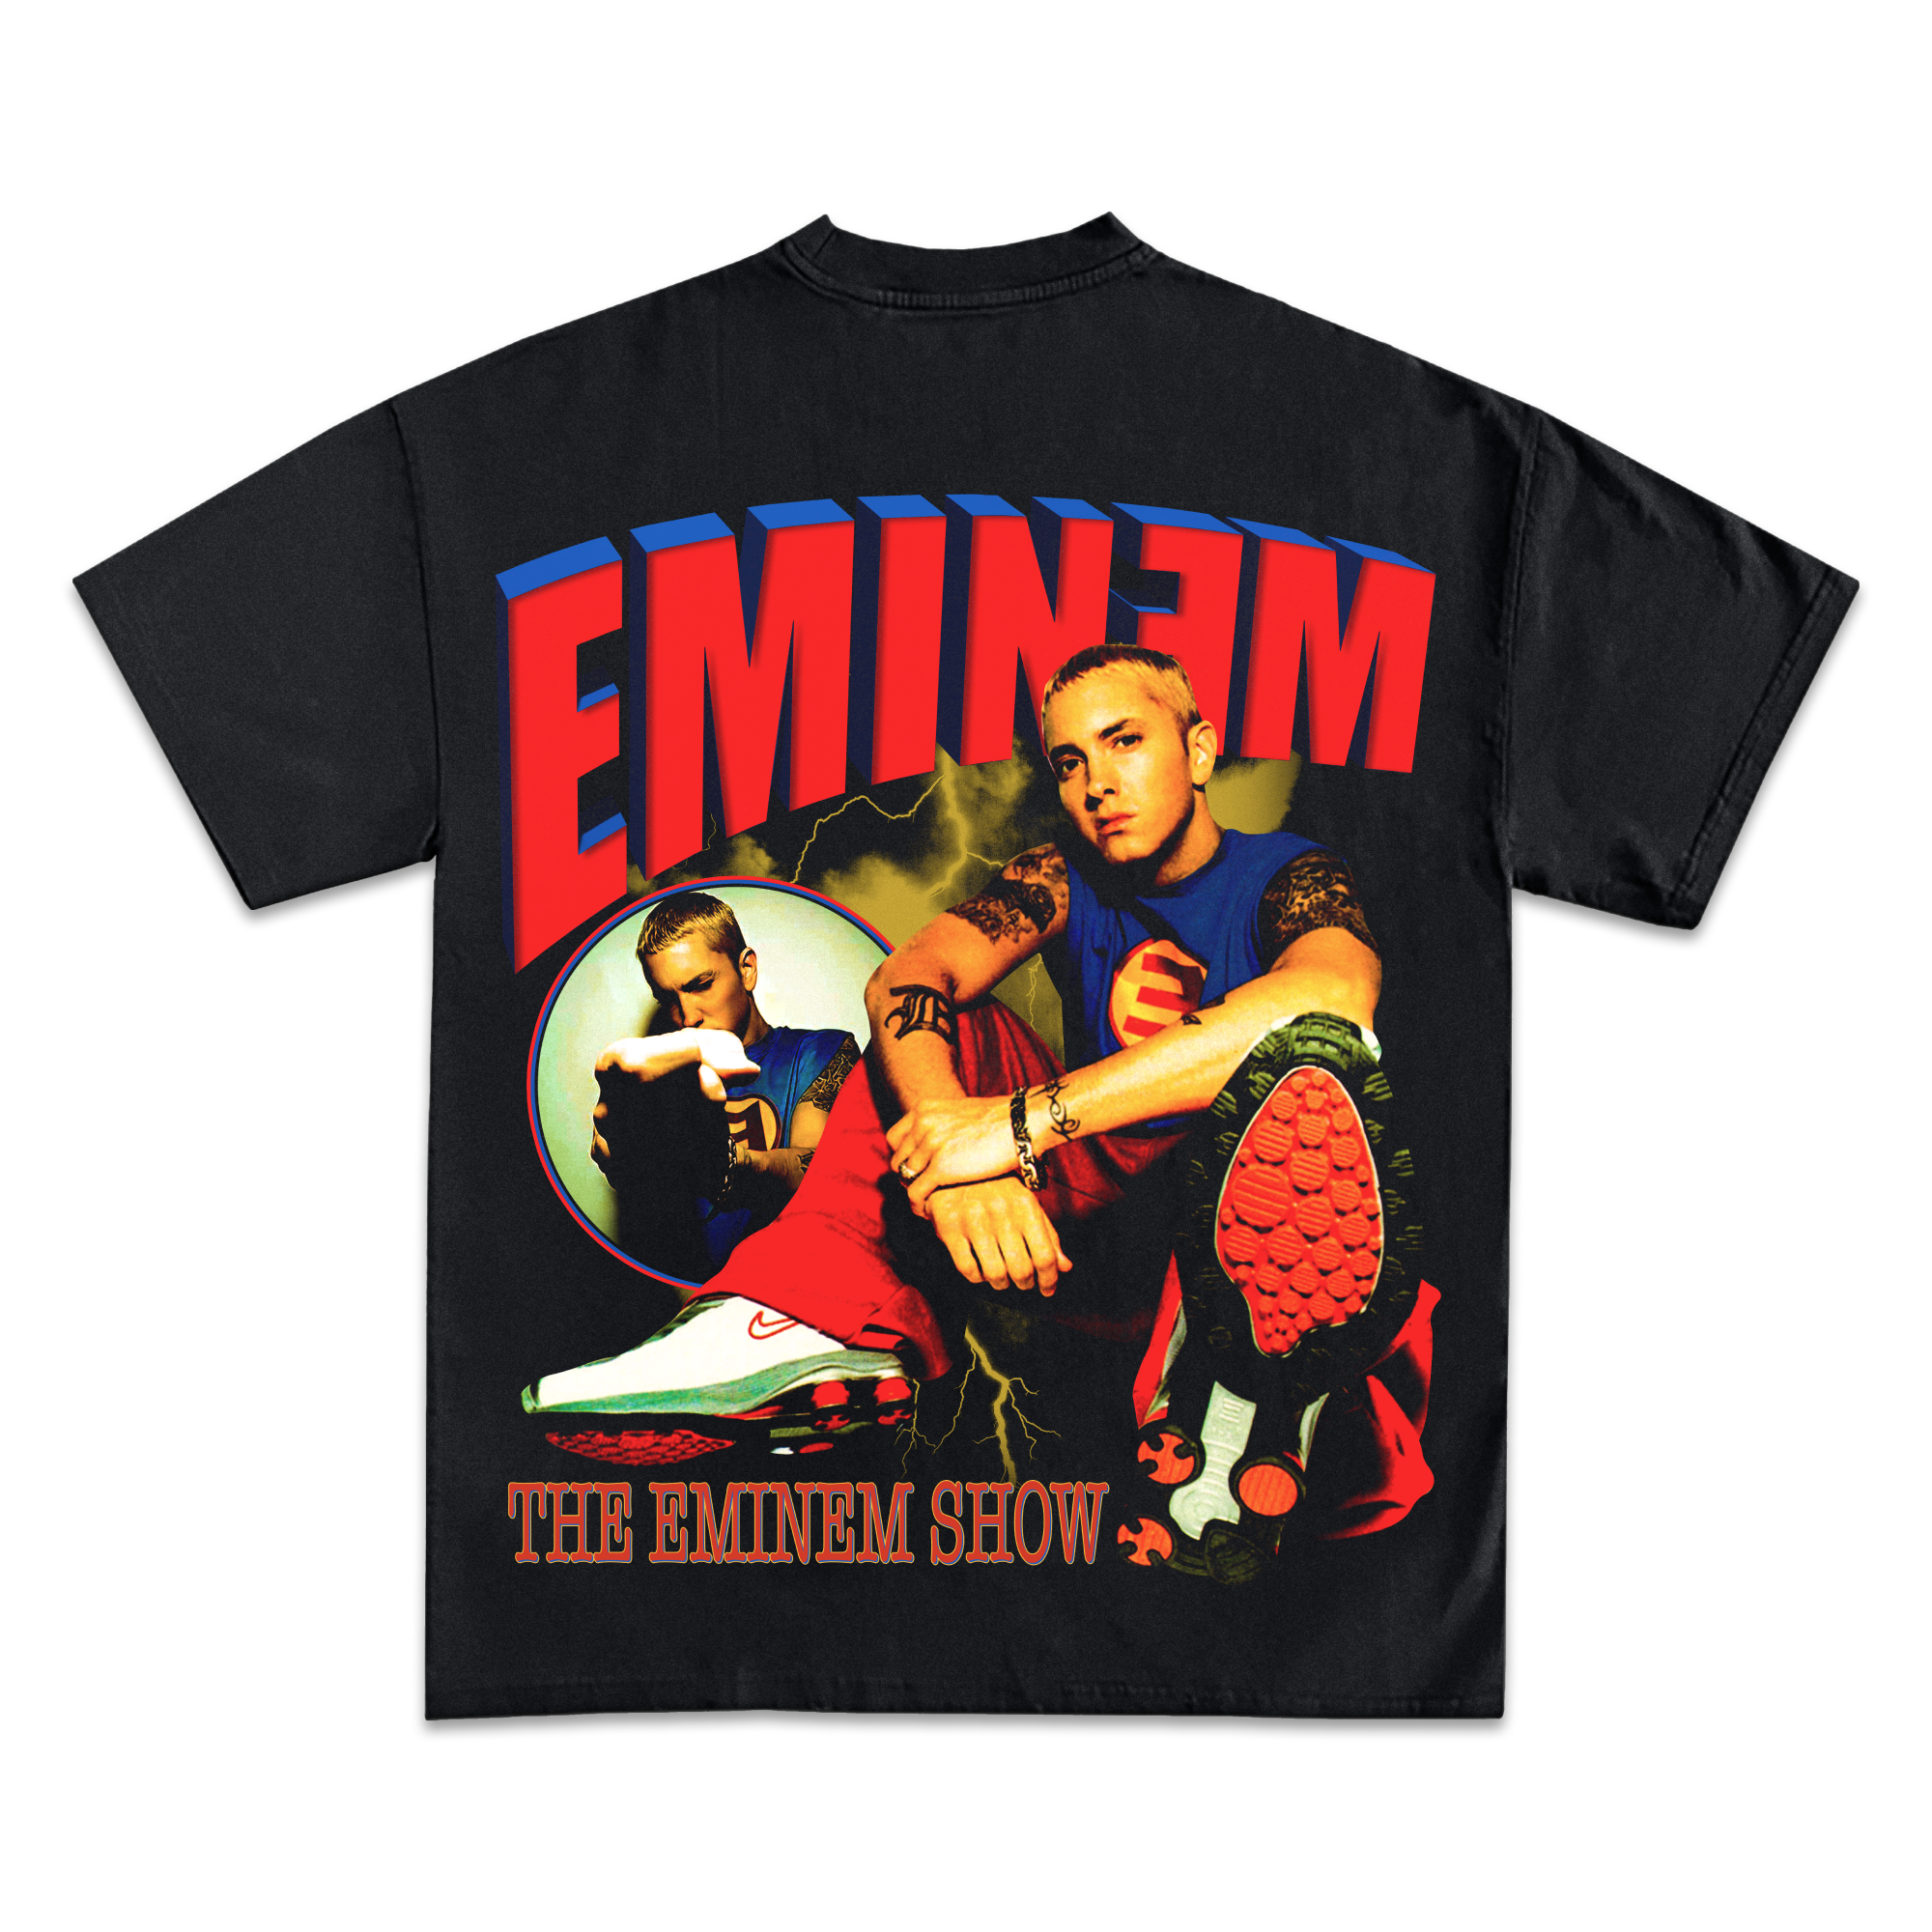 The Eminem Show Graphic T-Shirt